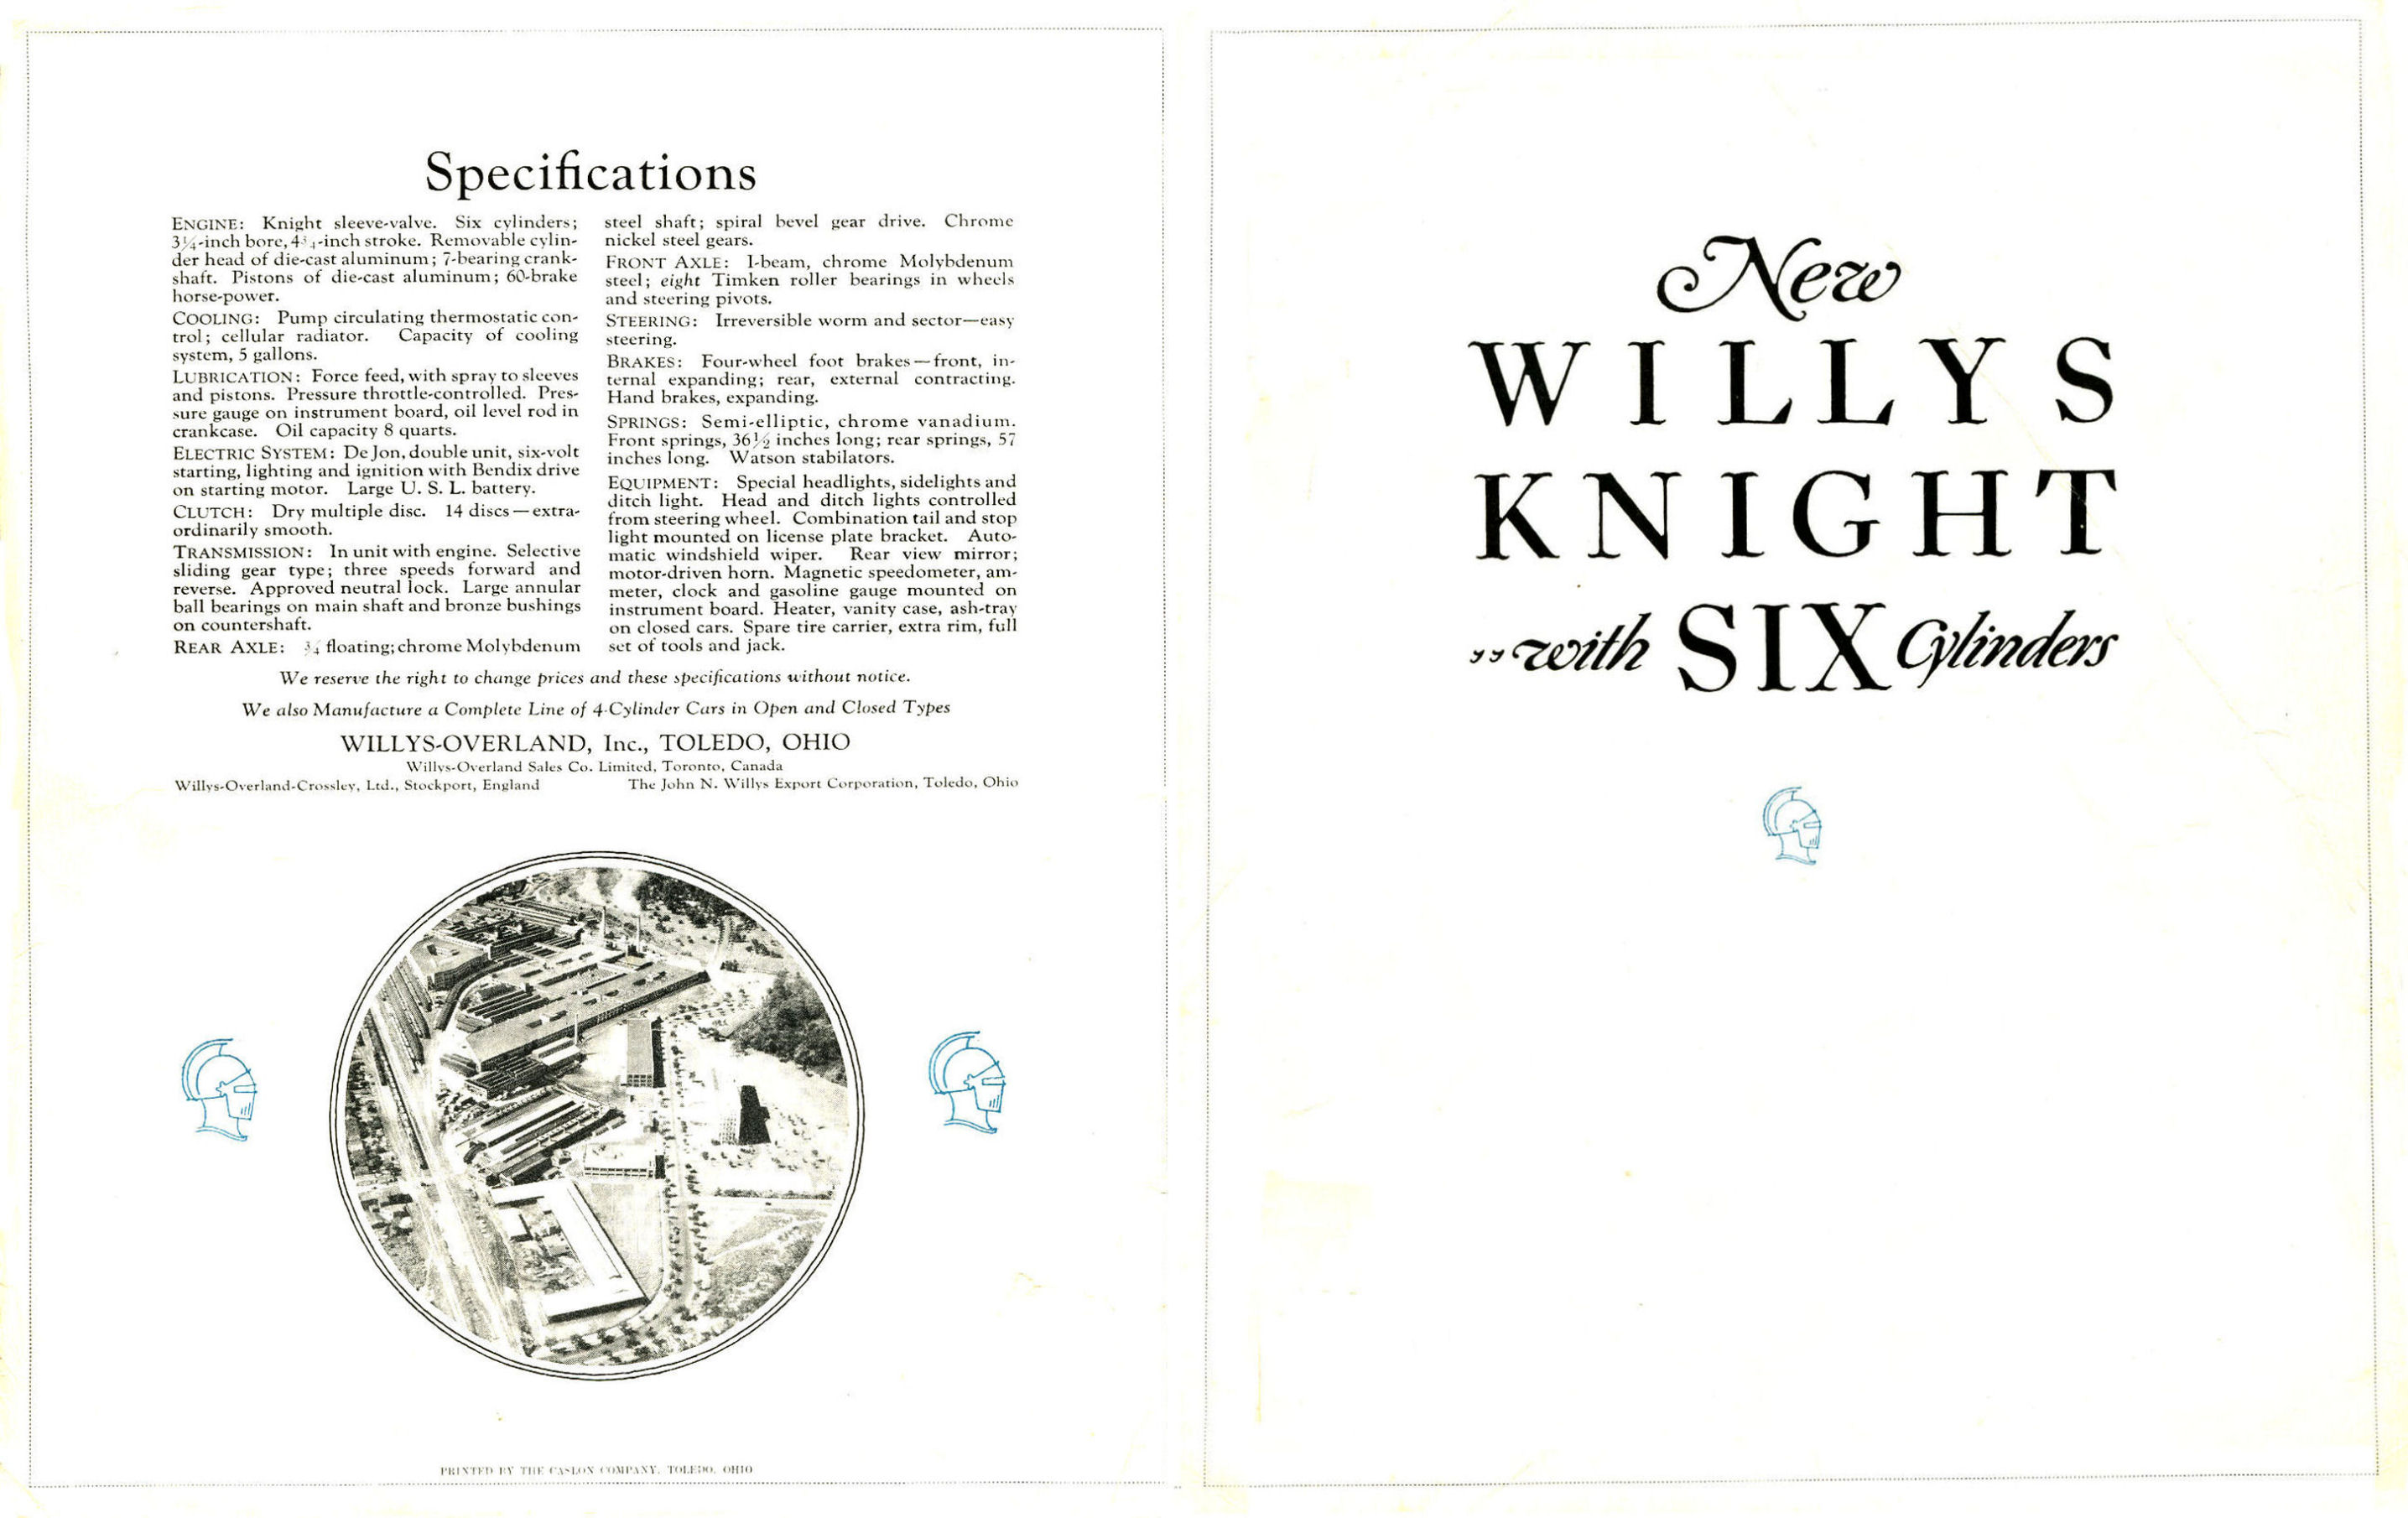 1926_Willys-Knight_Six-24-25